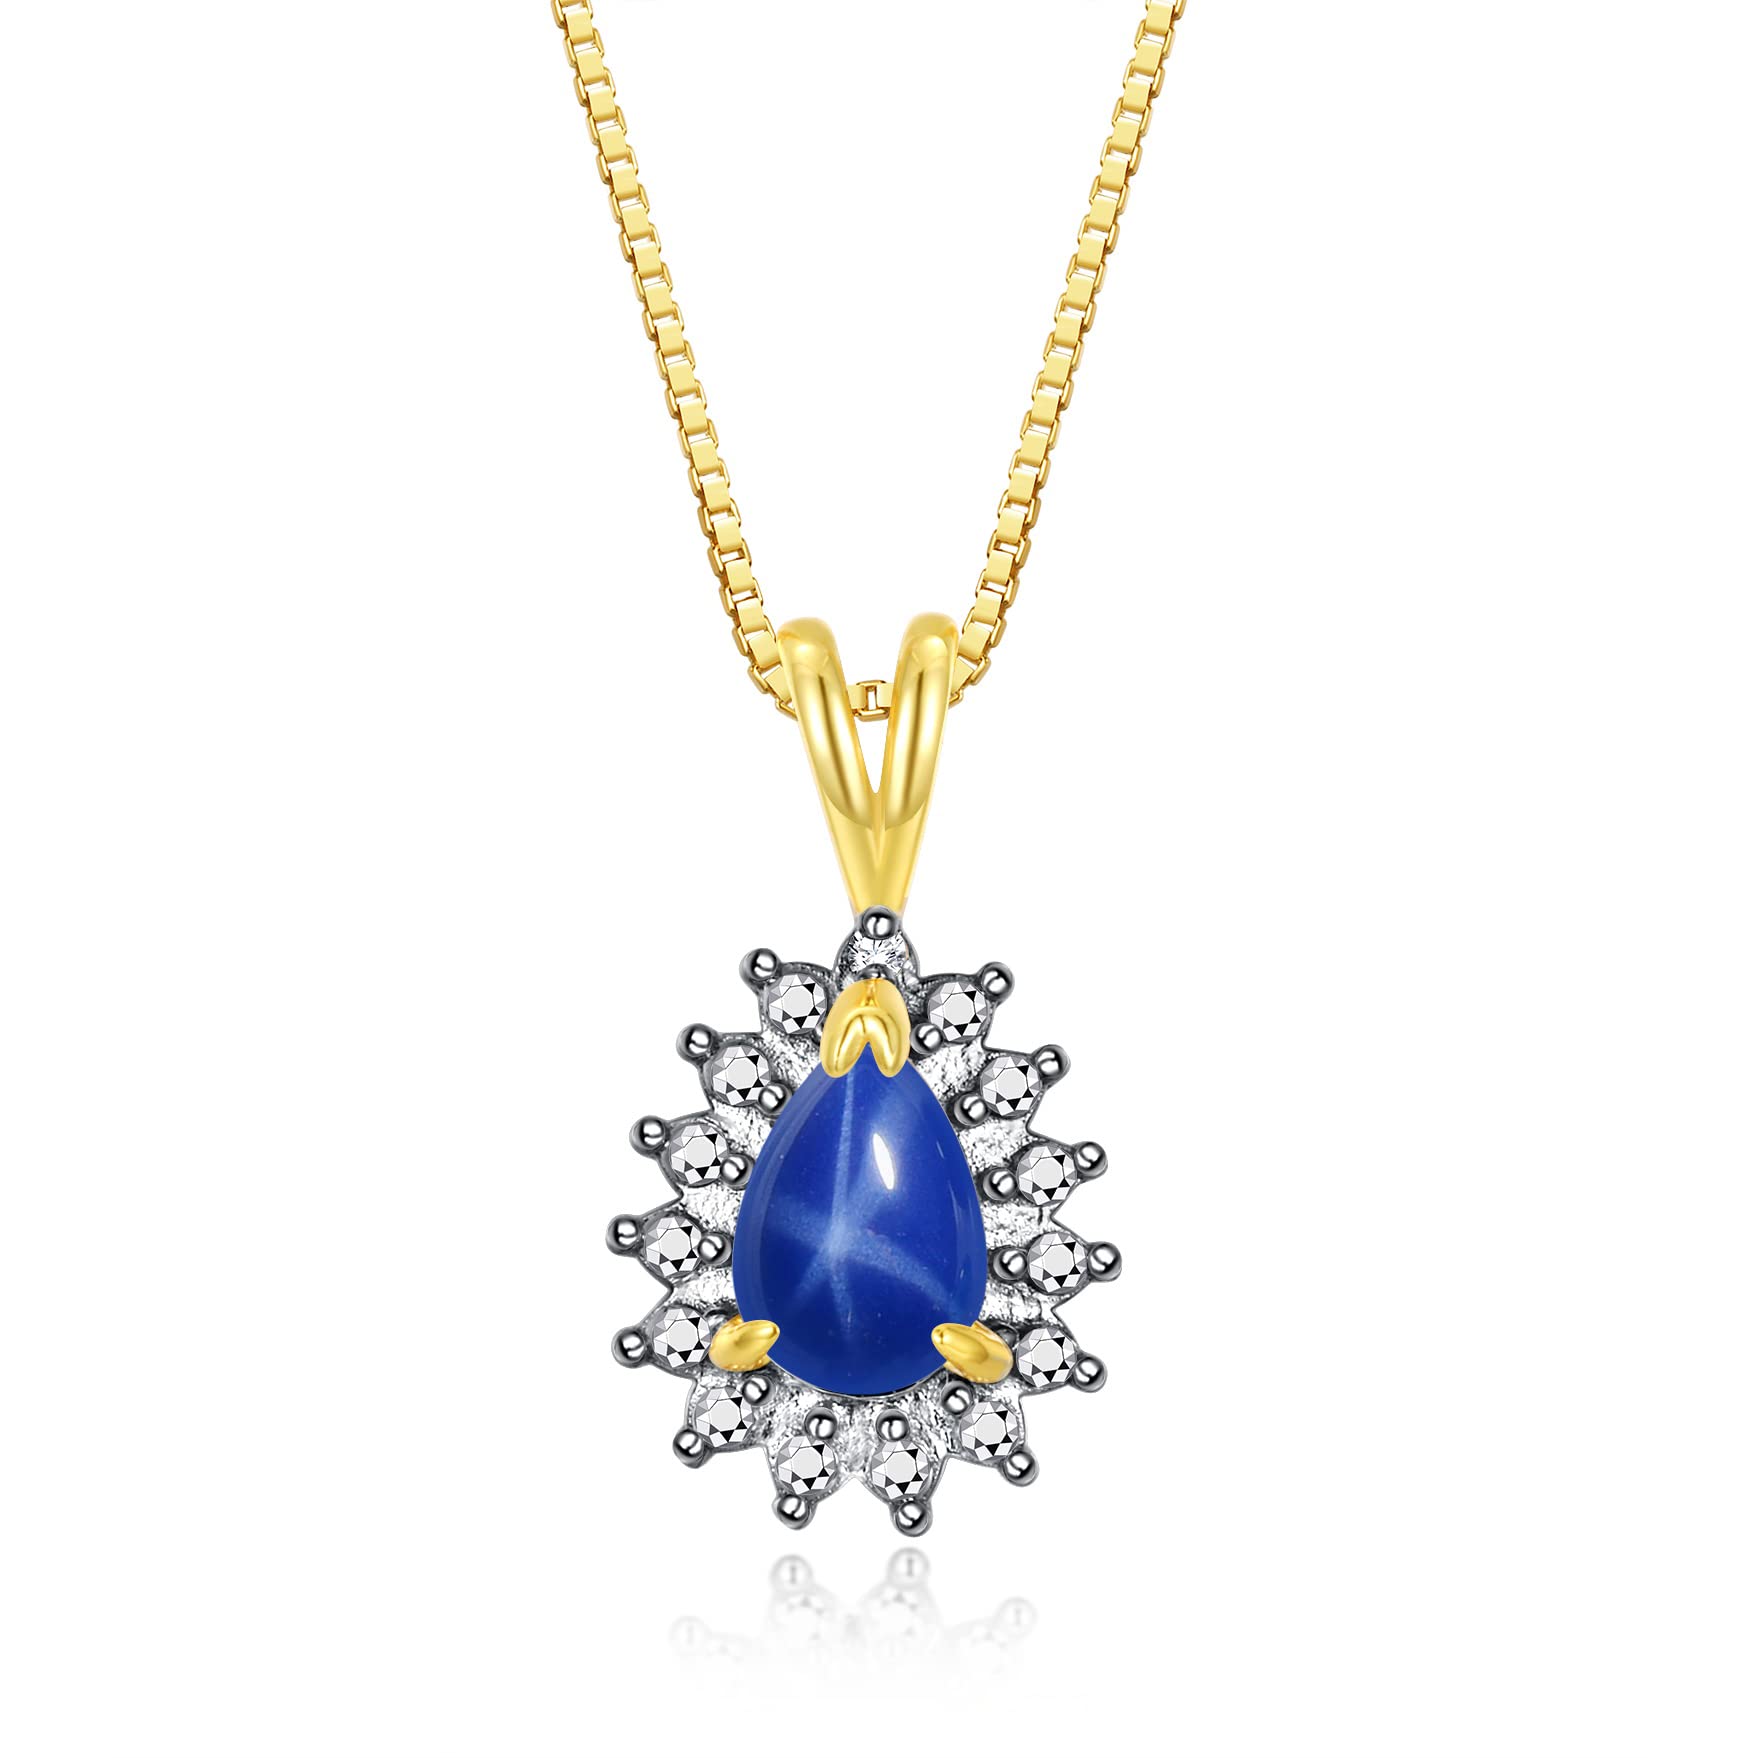 Rylos Women's 14K Yellow Gold Birthstone Set: Ring, Earring & Pendant Necklace. Gemstone & Diamonds, Pear Tear Drop Shape 6X4MM Birthstone. Perfectly Matching Gold Jewelry. Sizes 5-10.